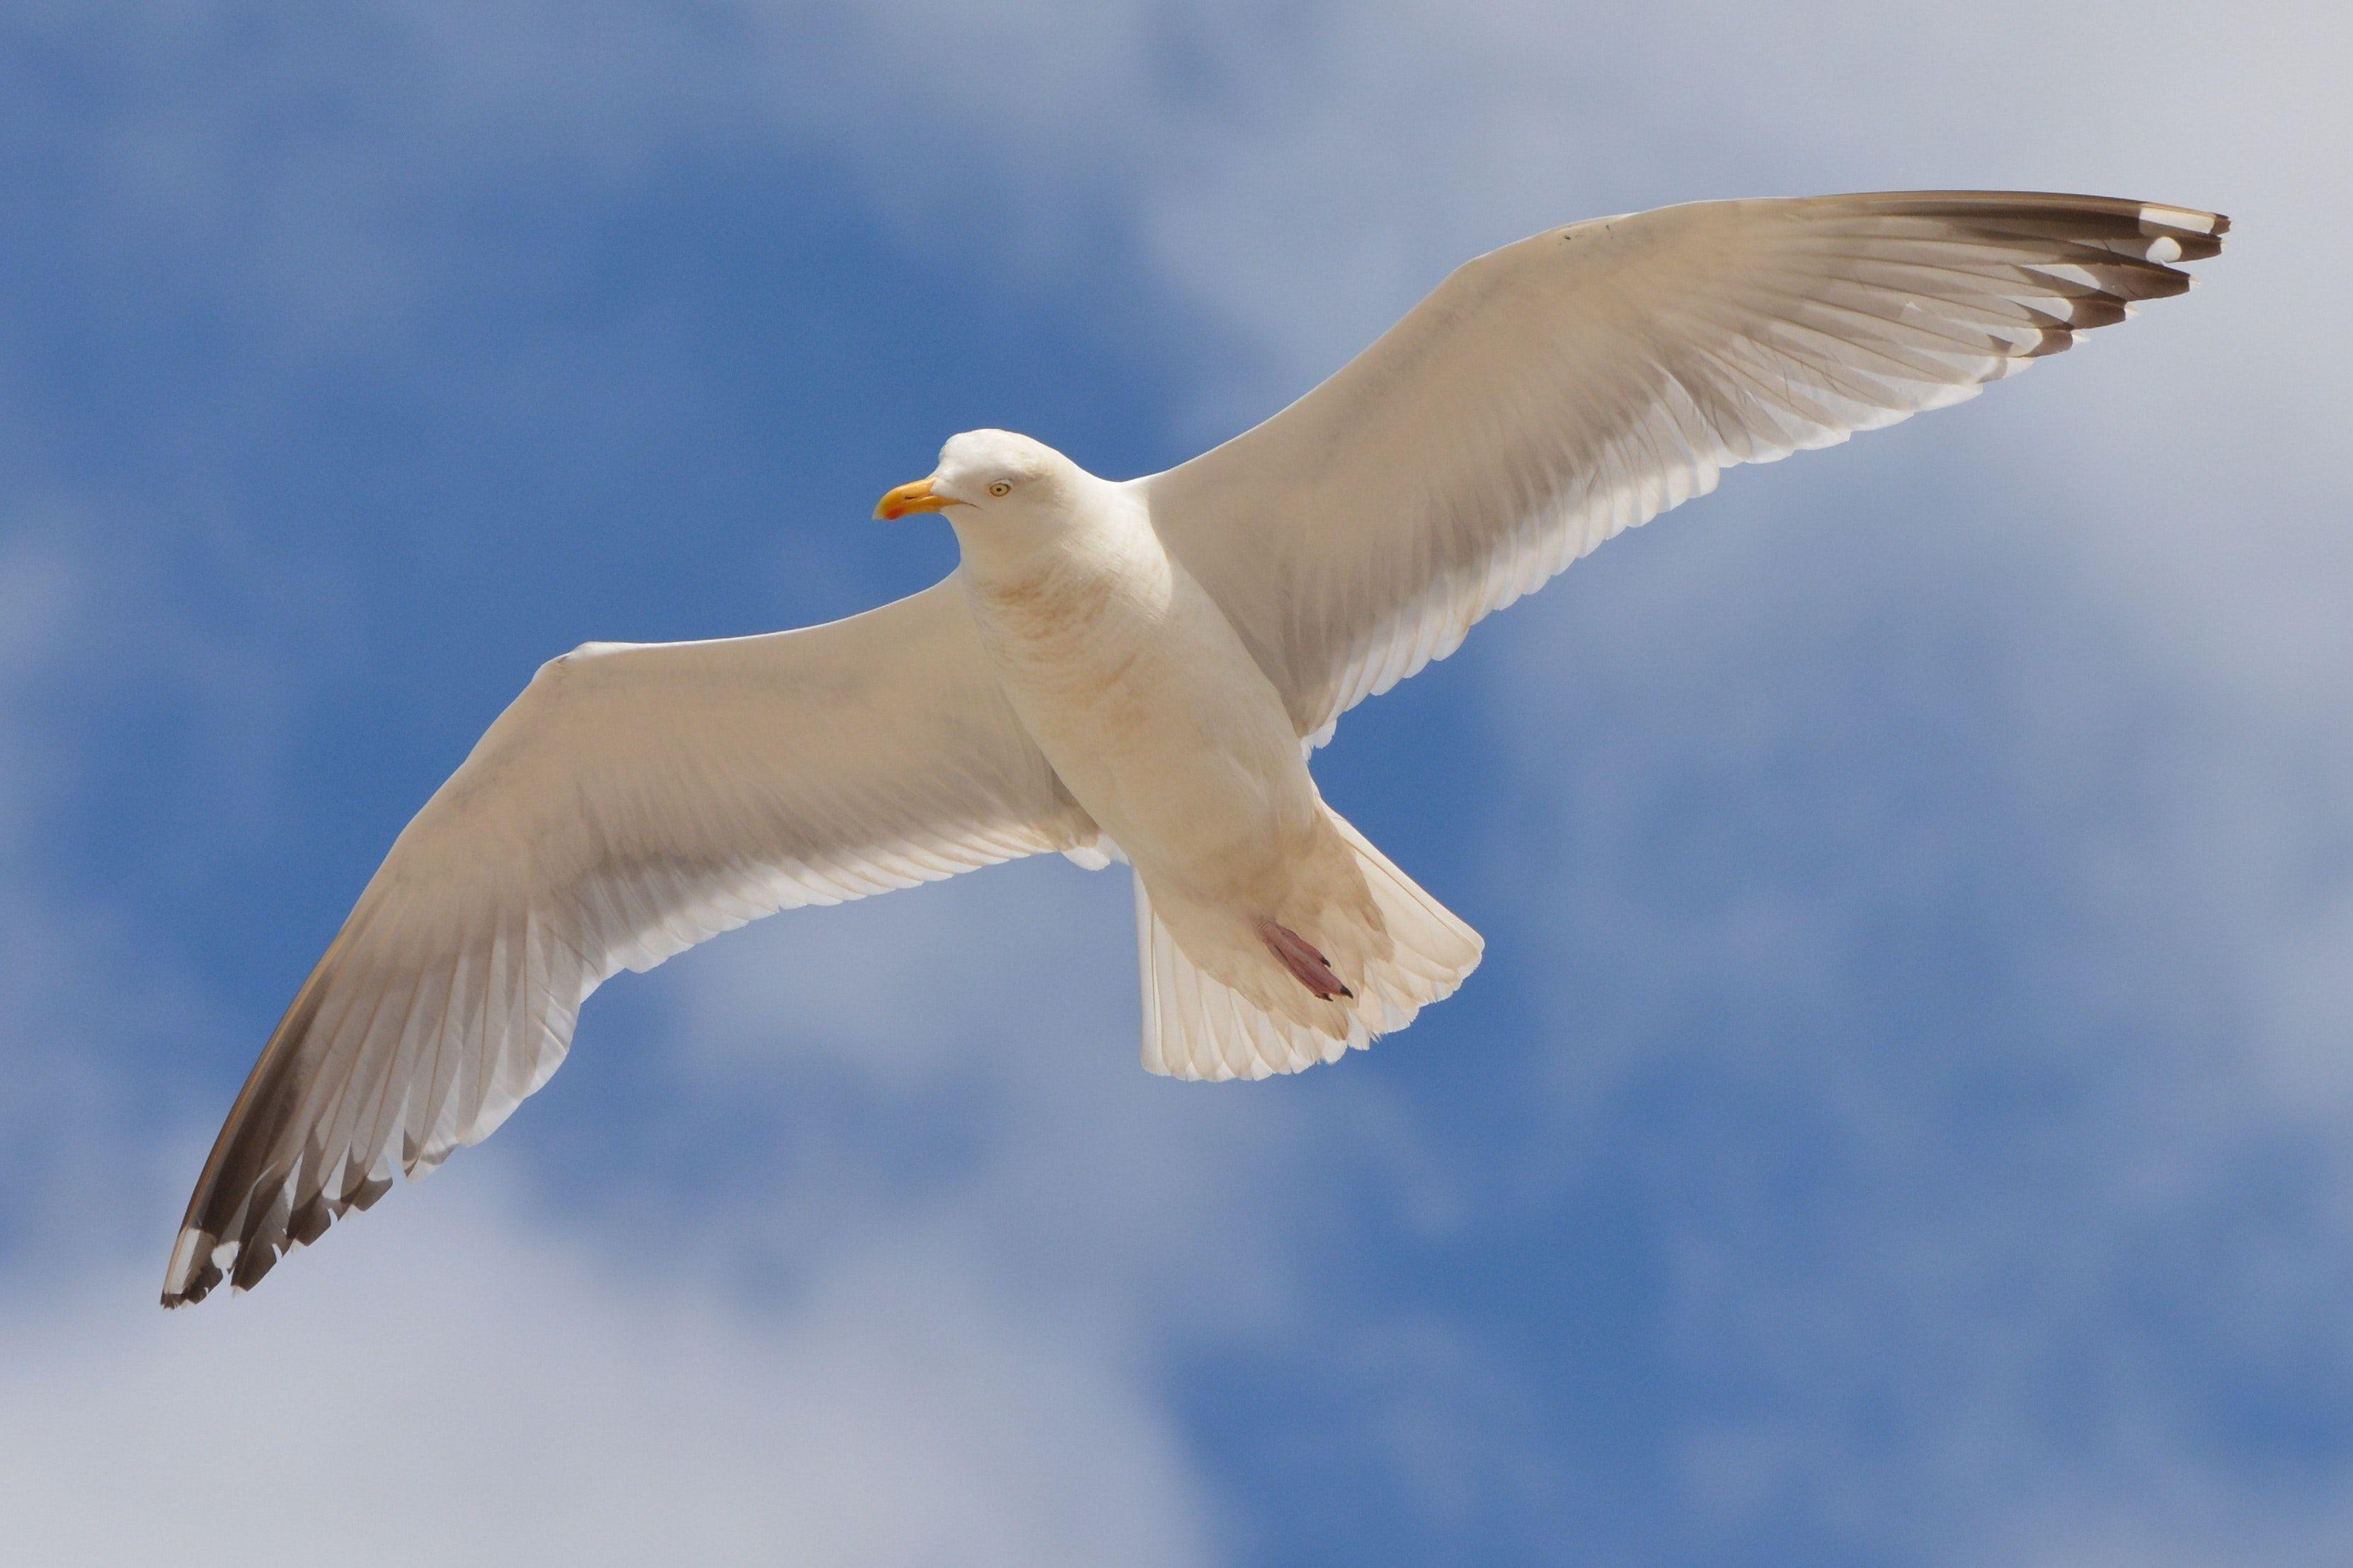 Blue White Bird Logo - White Bird Flying Under the Blue and White Sky during Daytime · Free